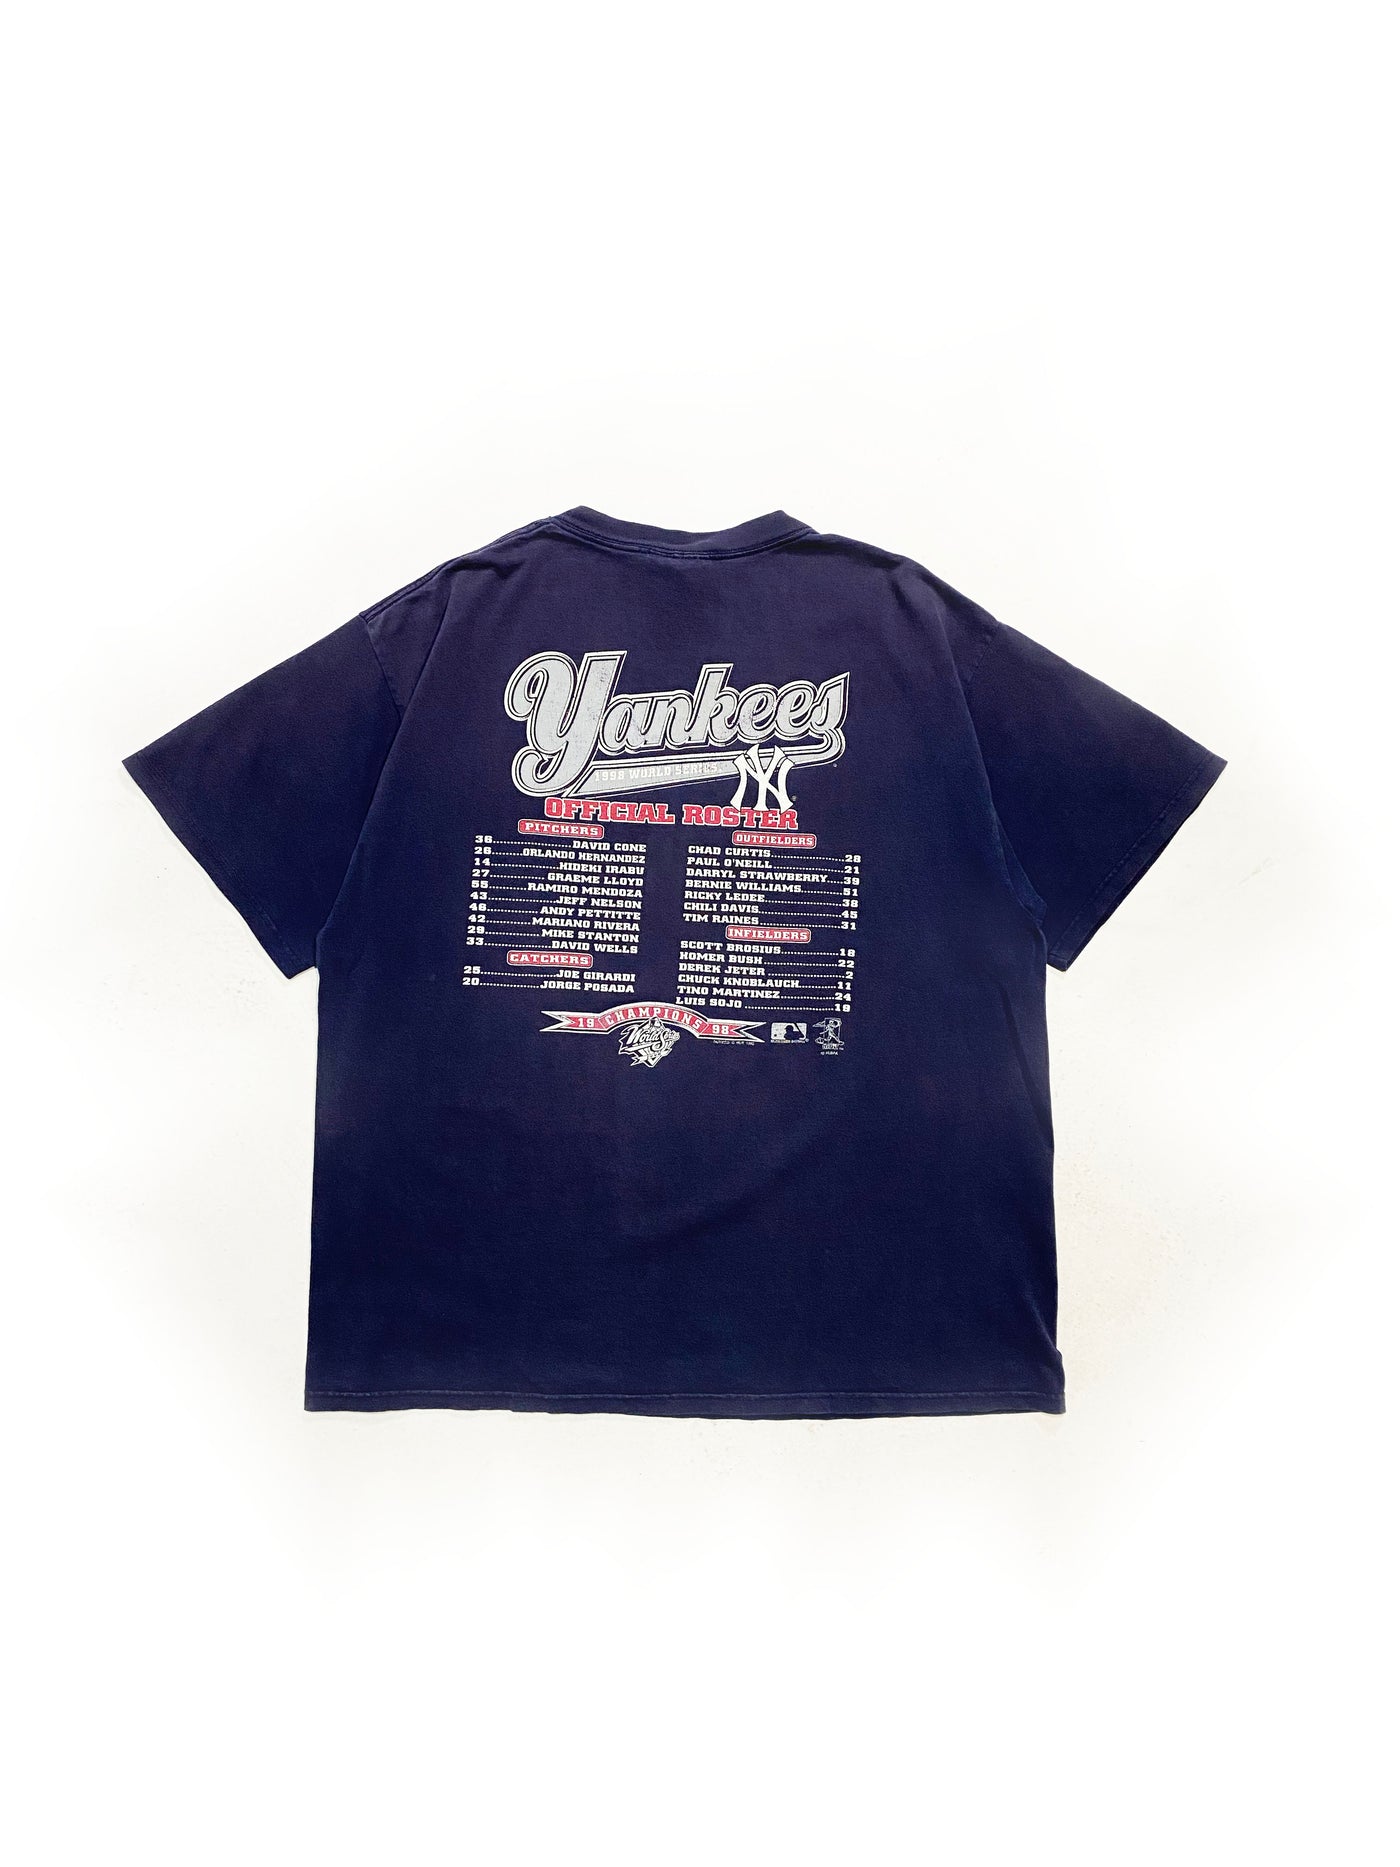 Vintage 1998 Yankees World Series Champions T-Shirt